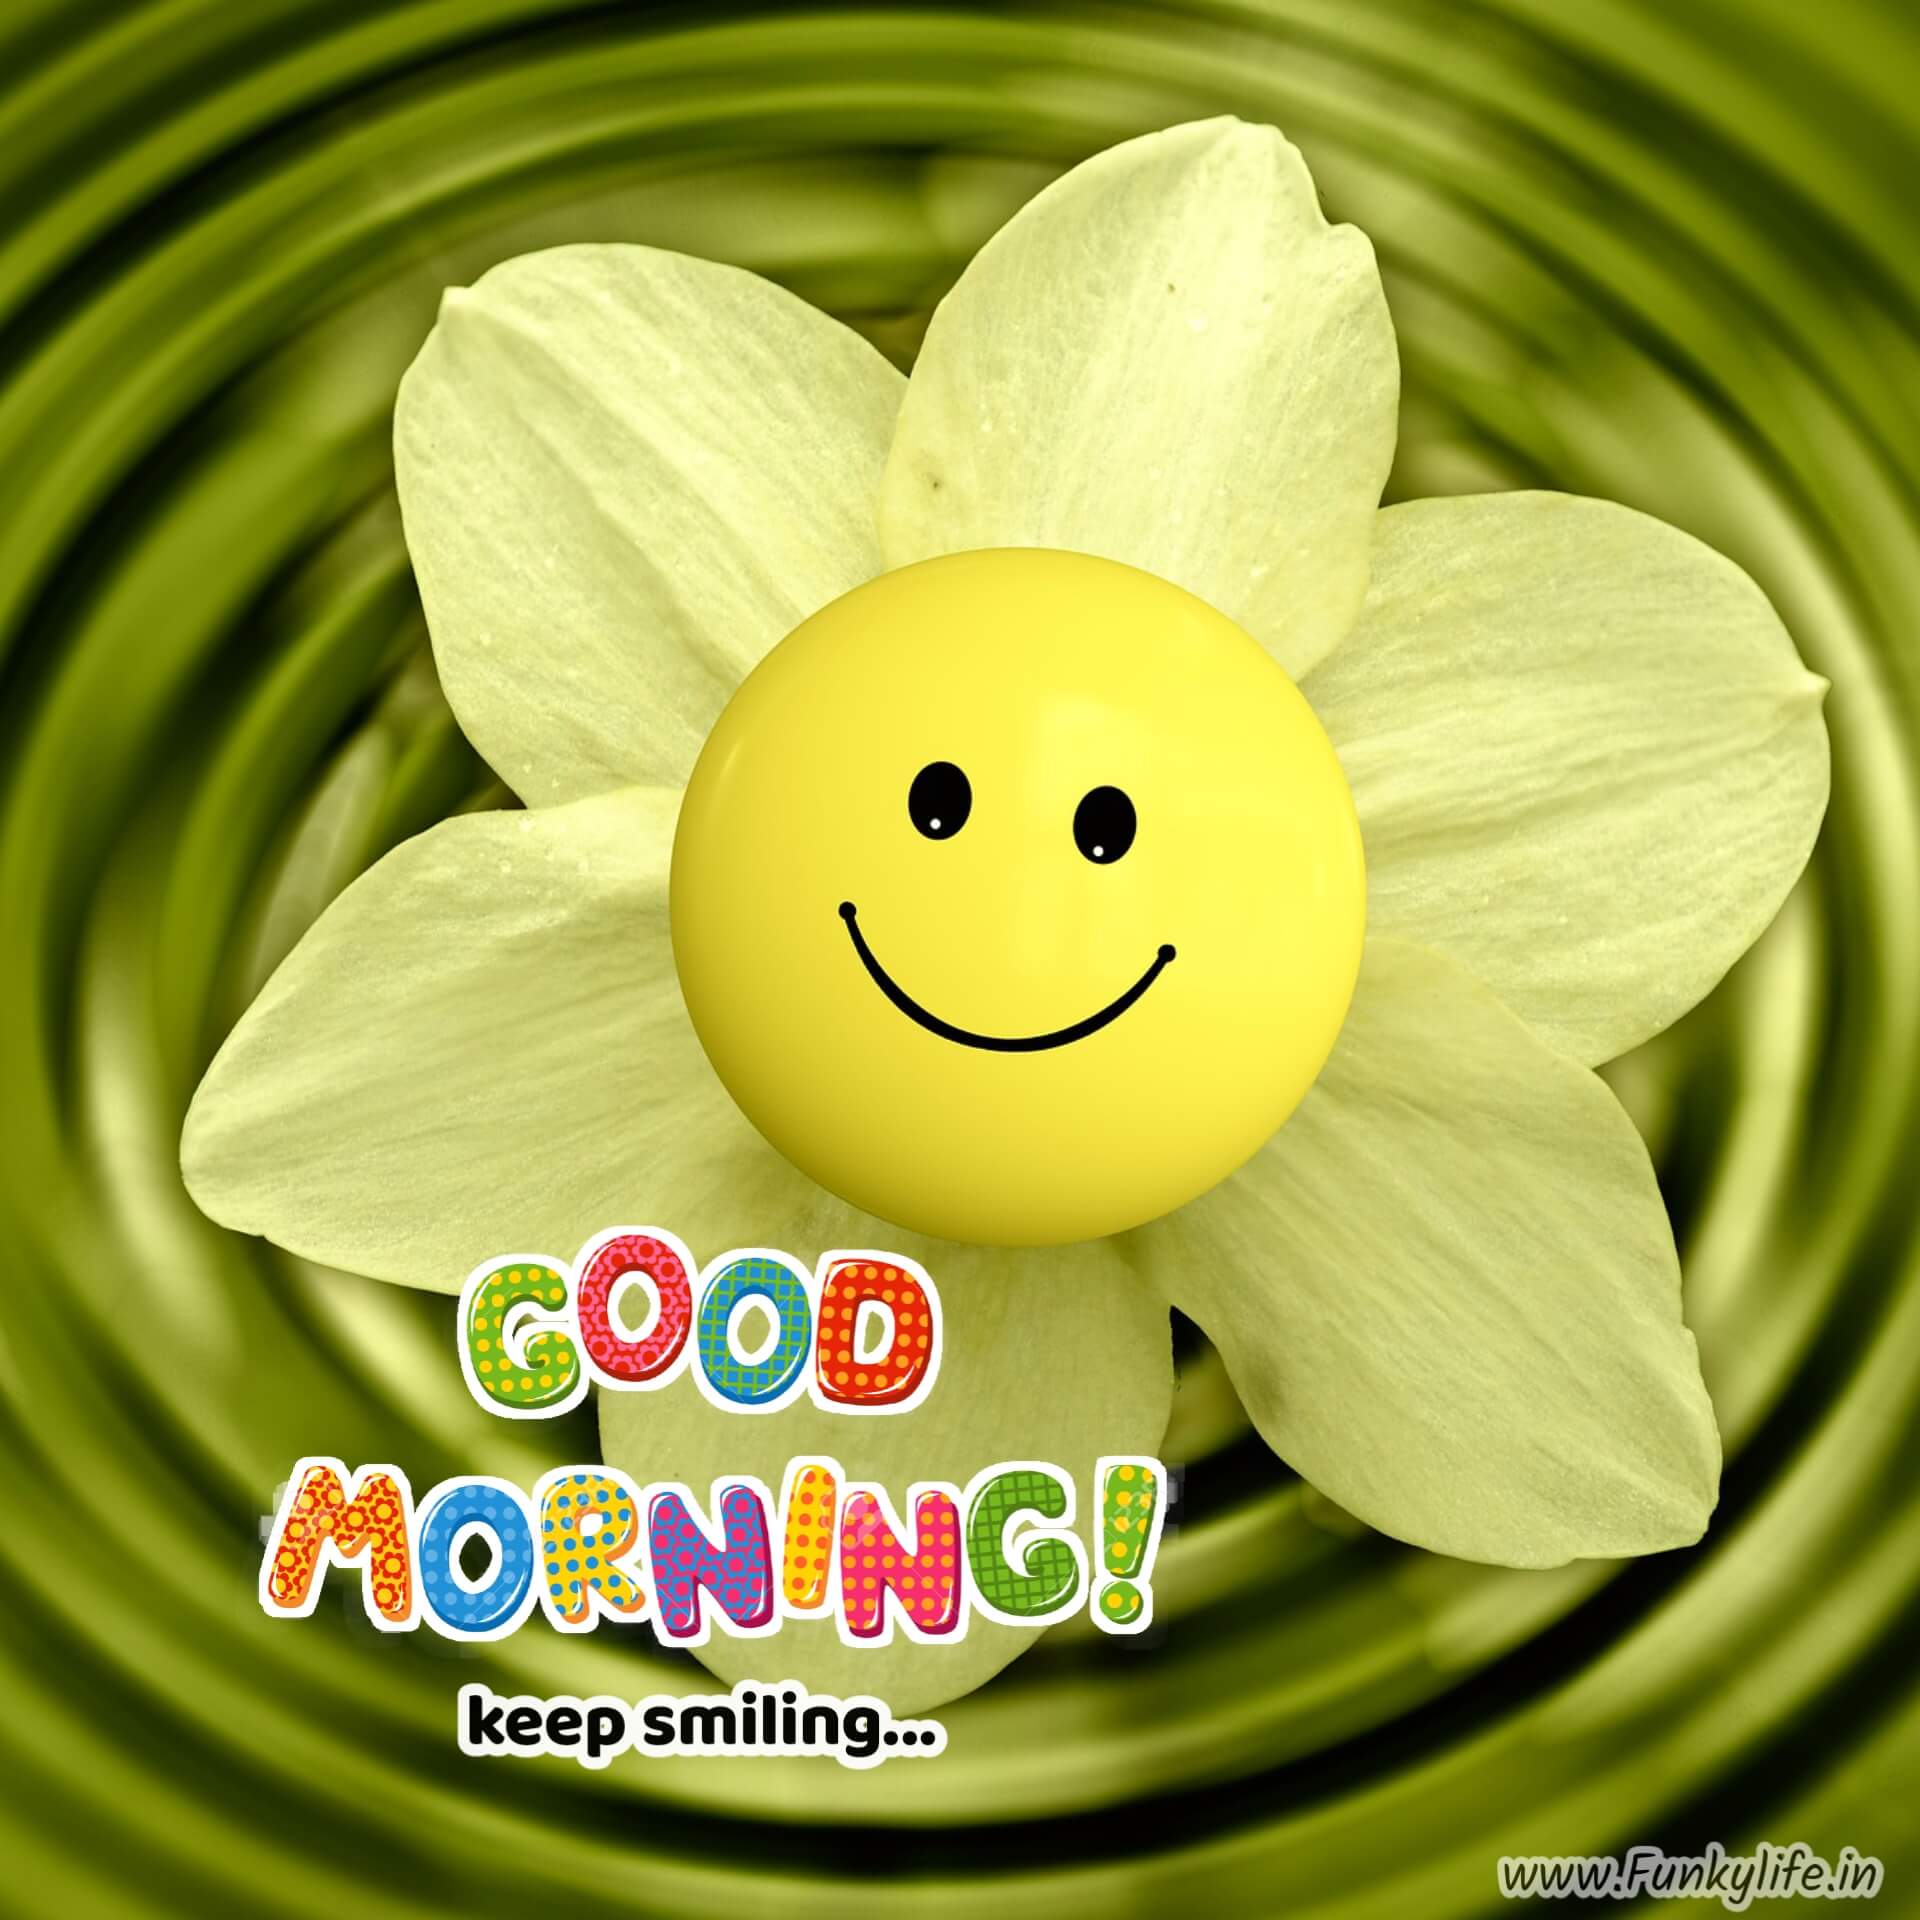 Good Morning Keep Smiling Images